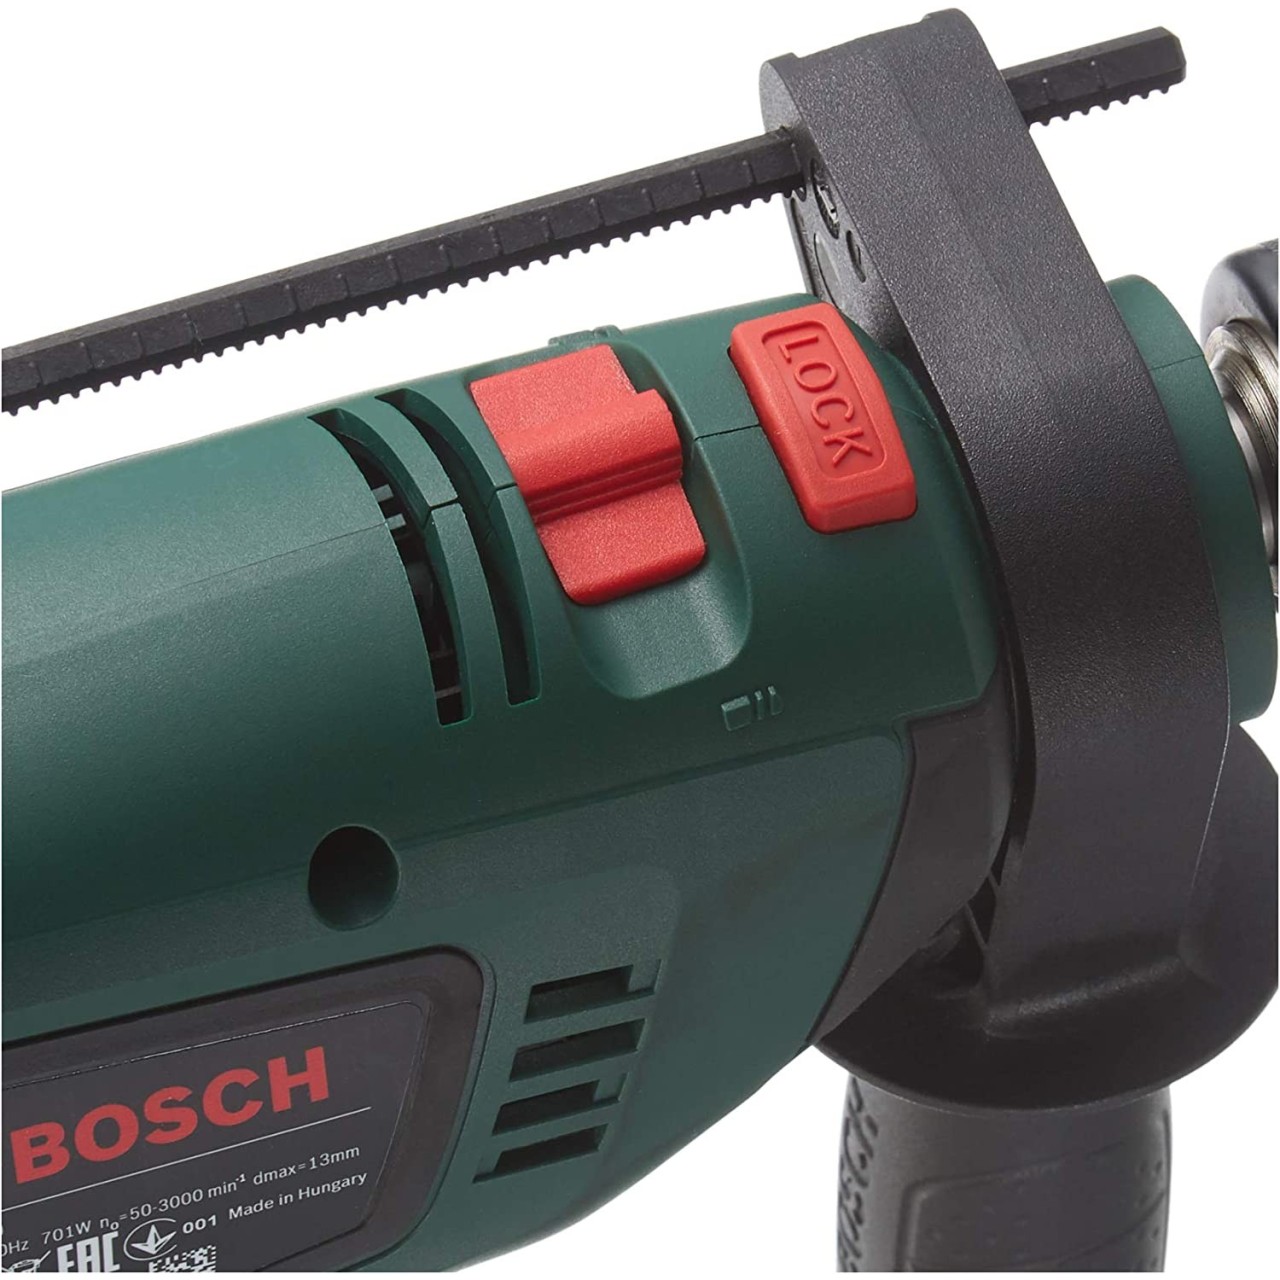 Bosch GSB 18V-21 Professional desde 119,65 €